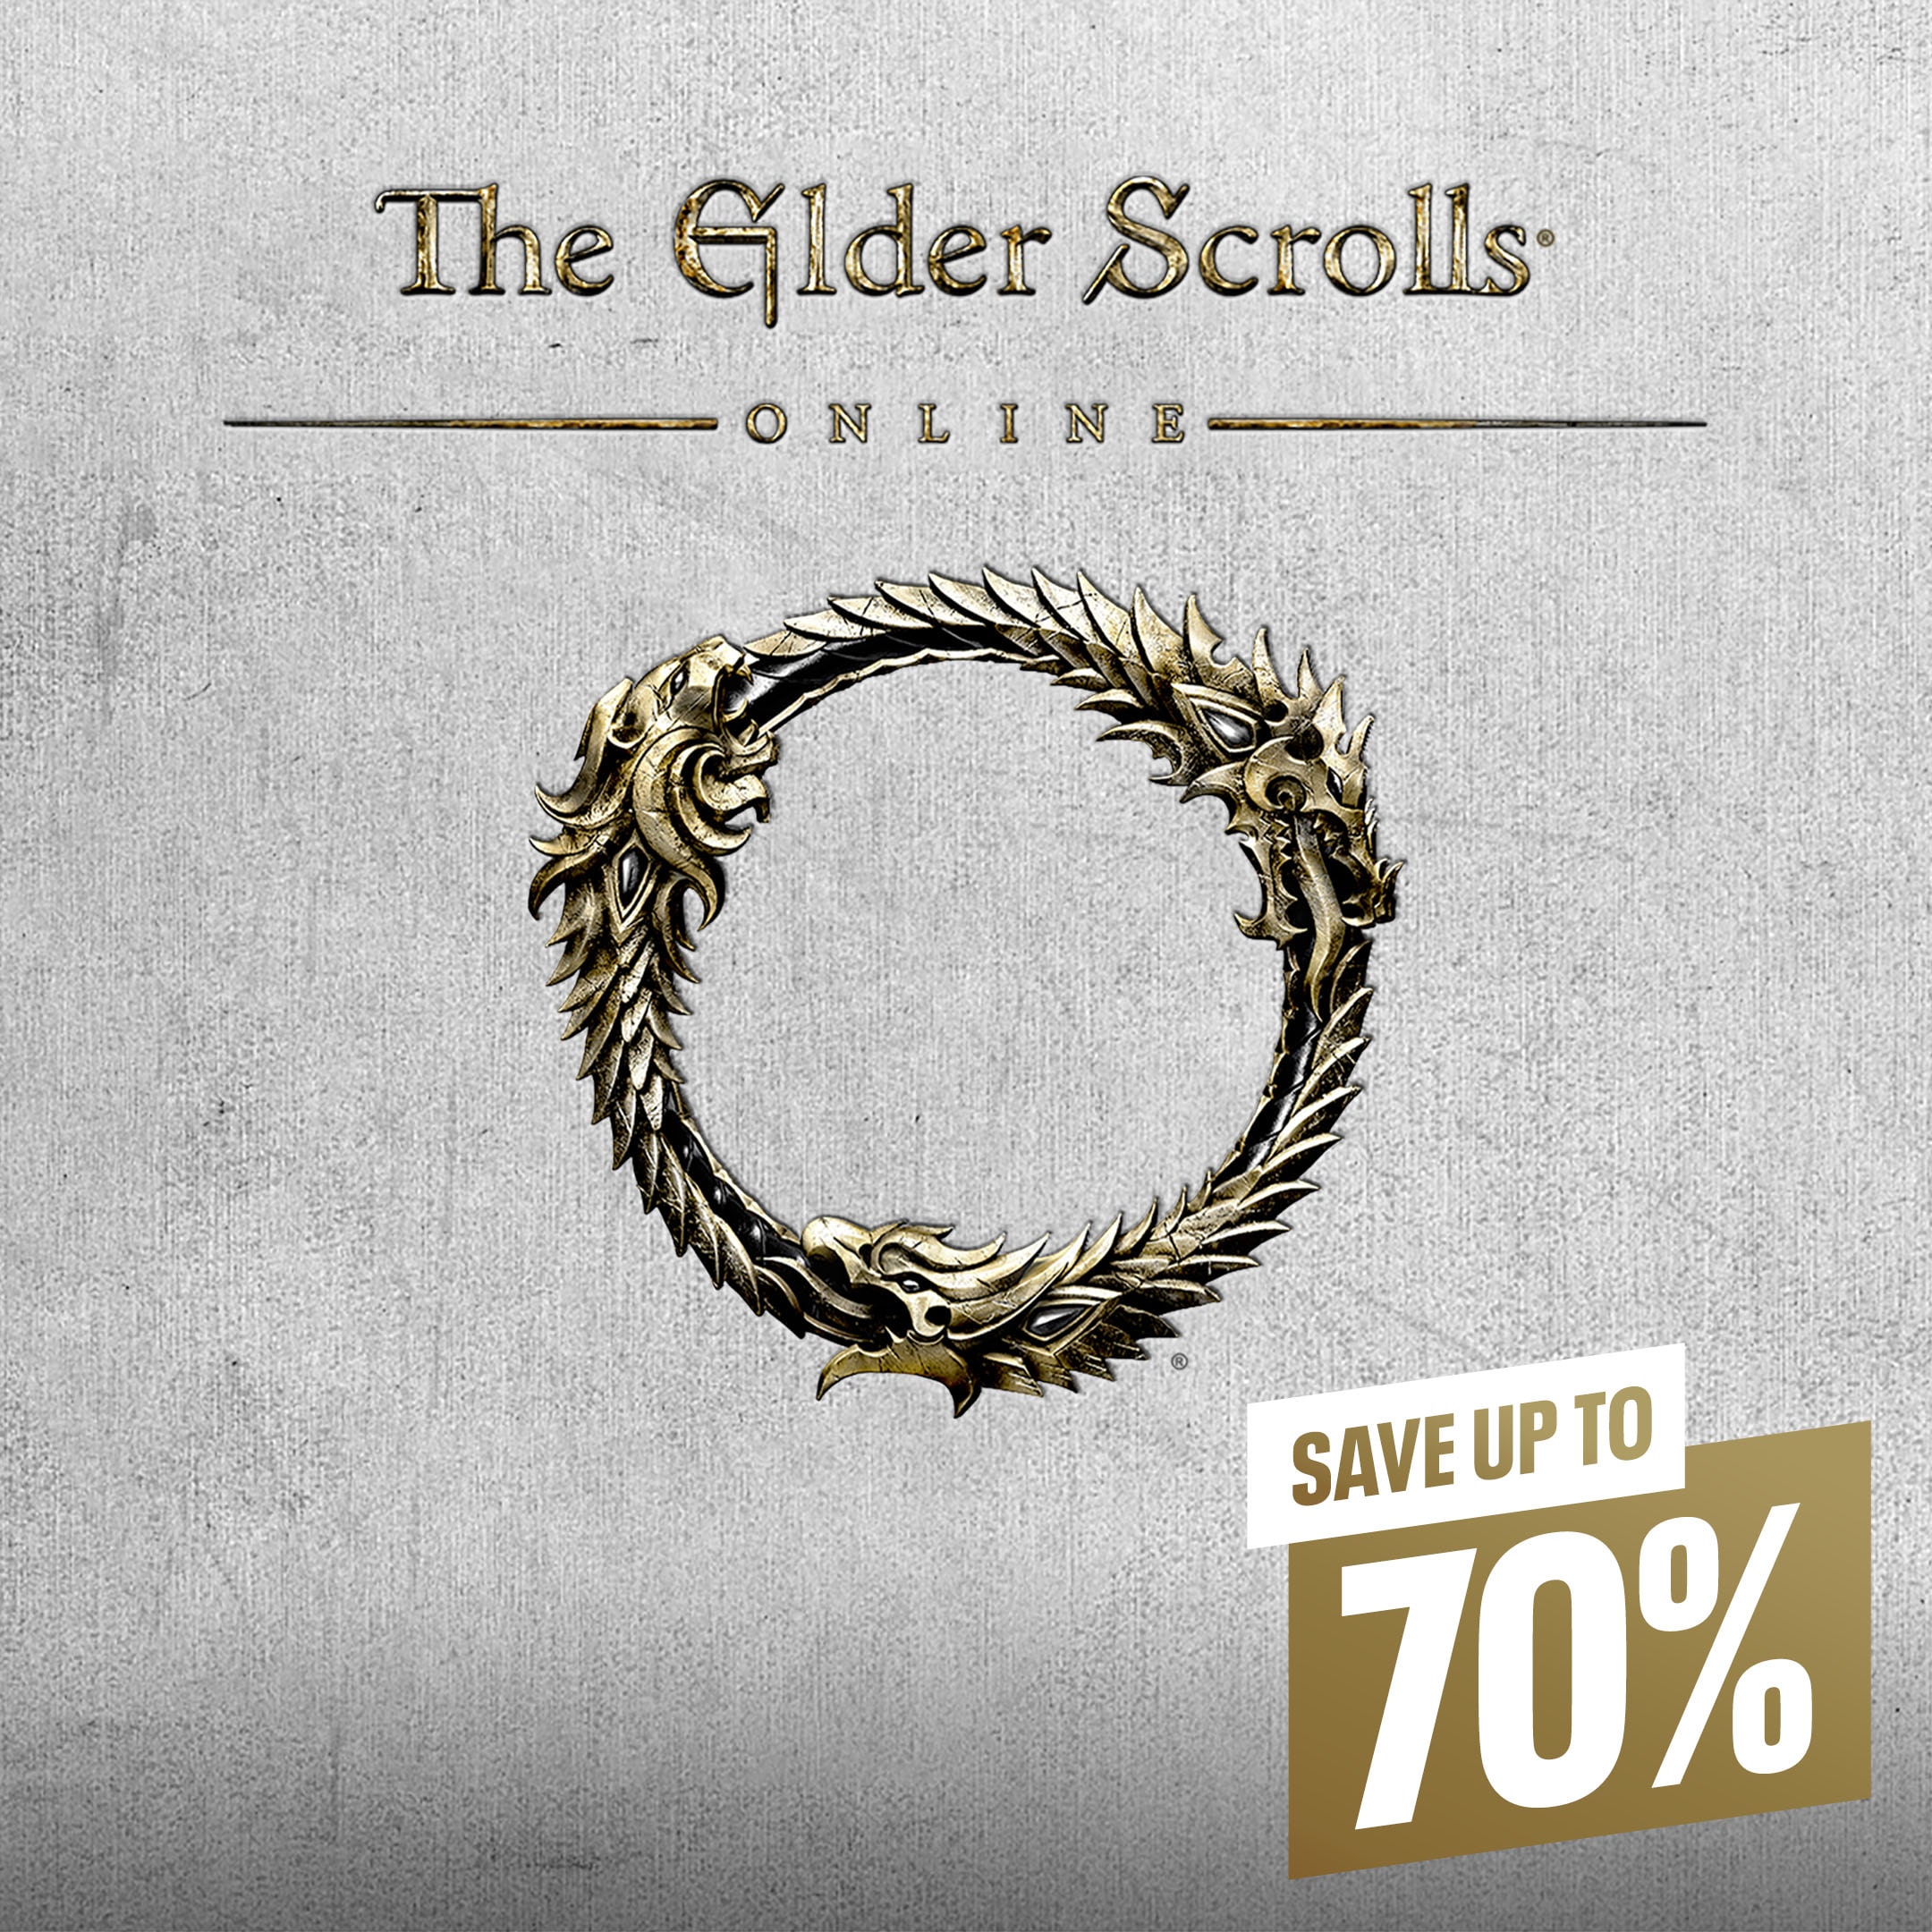 [PROMO] The Elder Scrolls Online